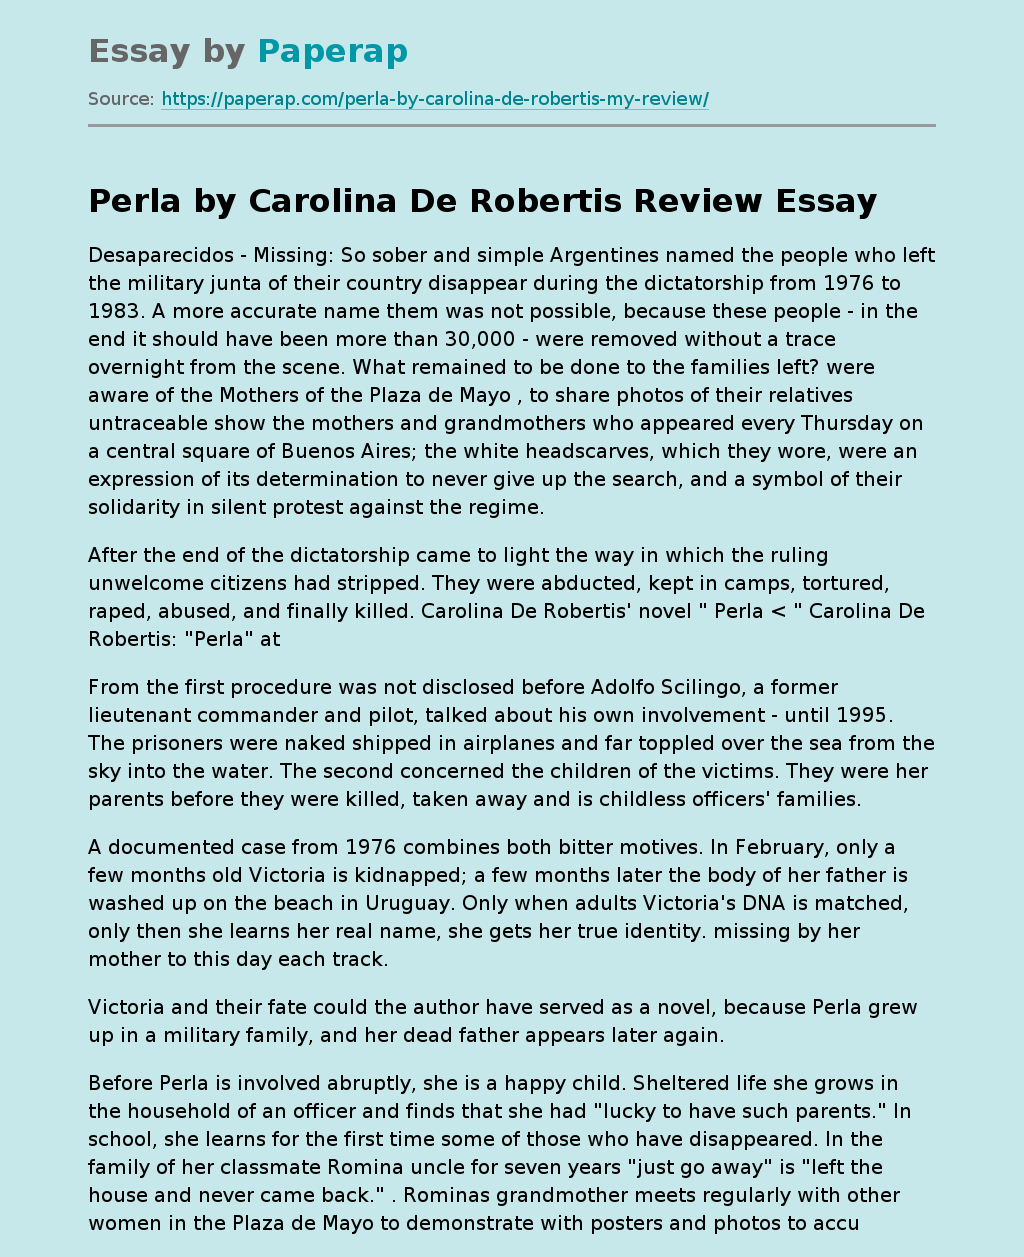 Novel "Perla" by Carolina De Robertis